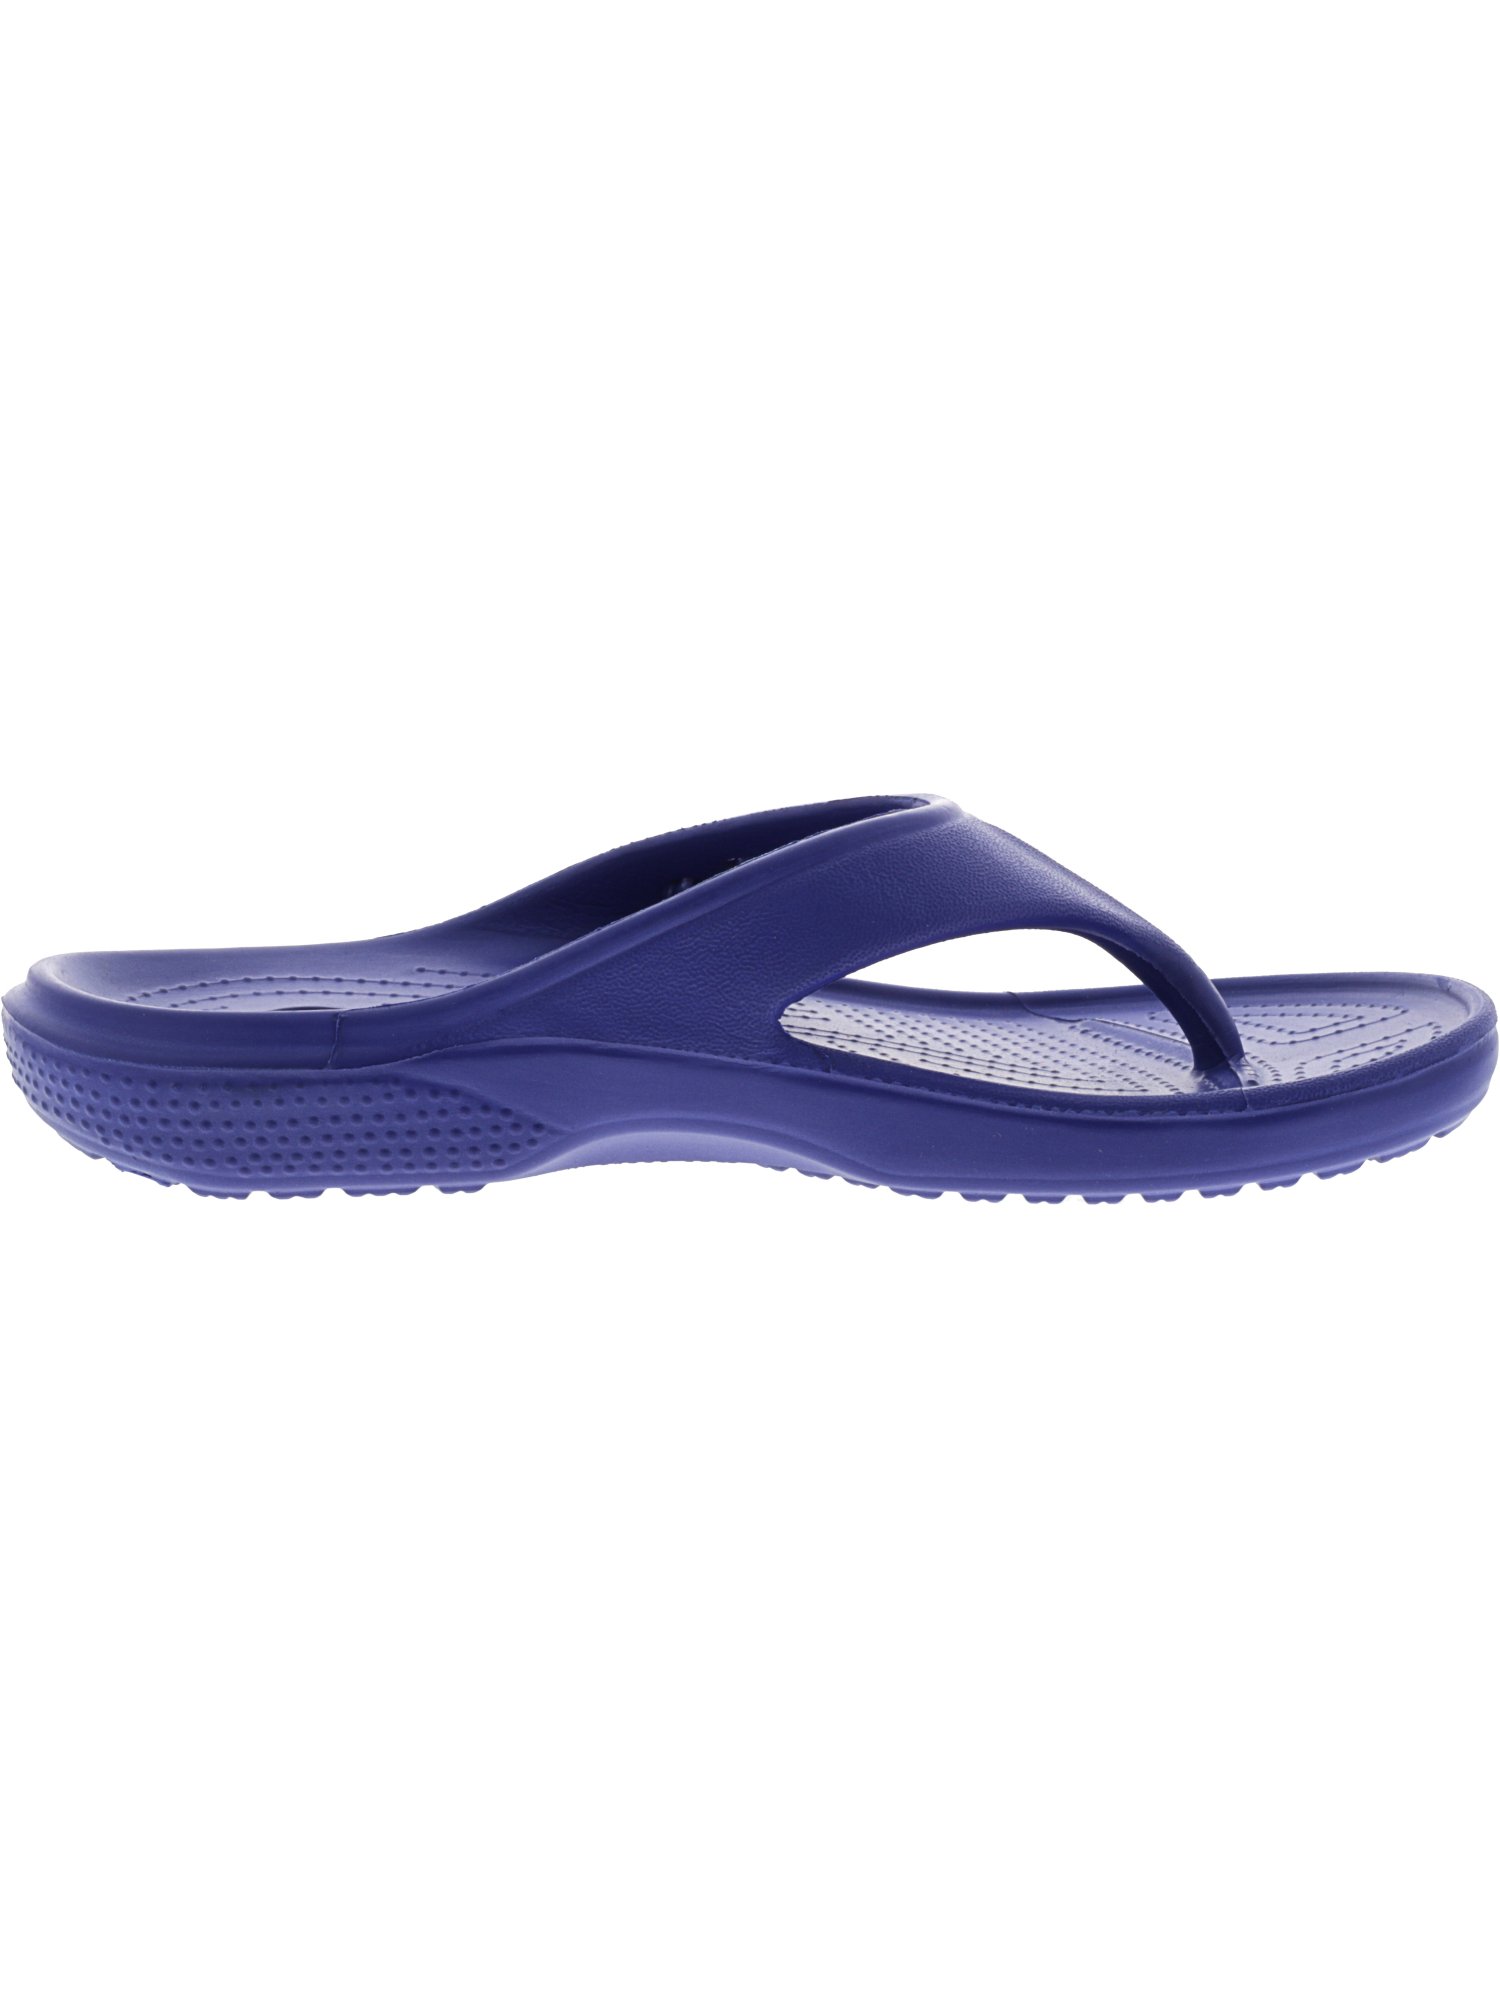  Crocs  Baya  Flip Sandal  eBay